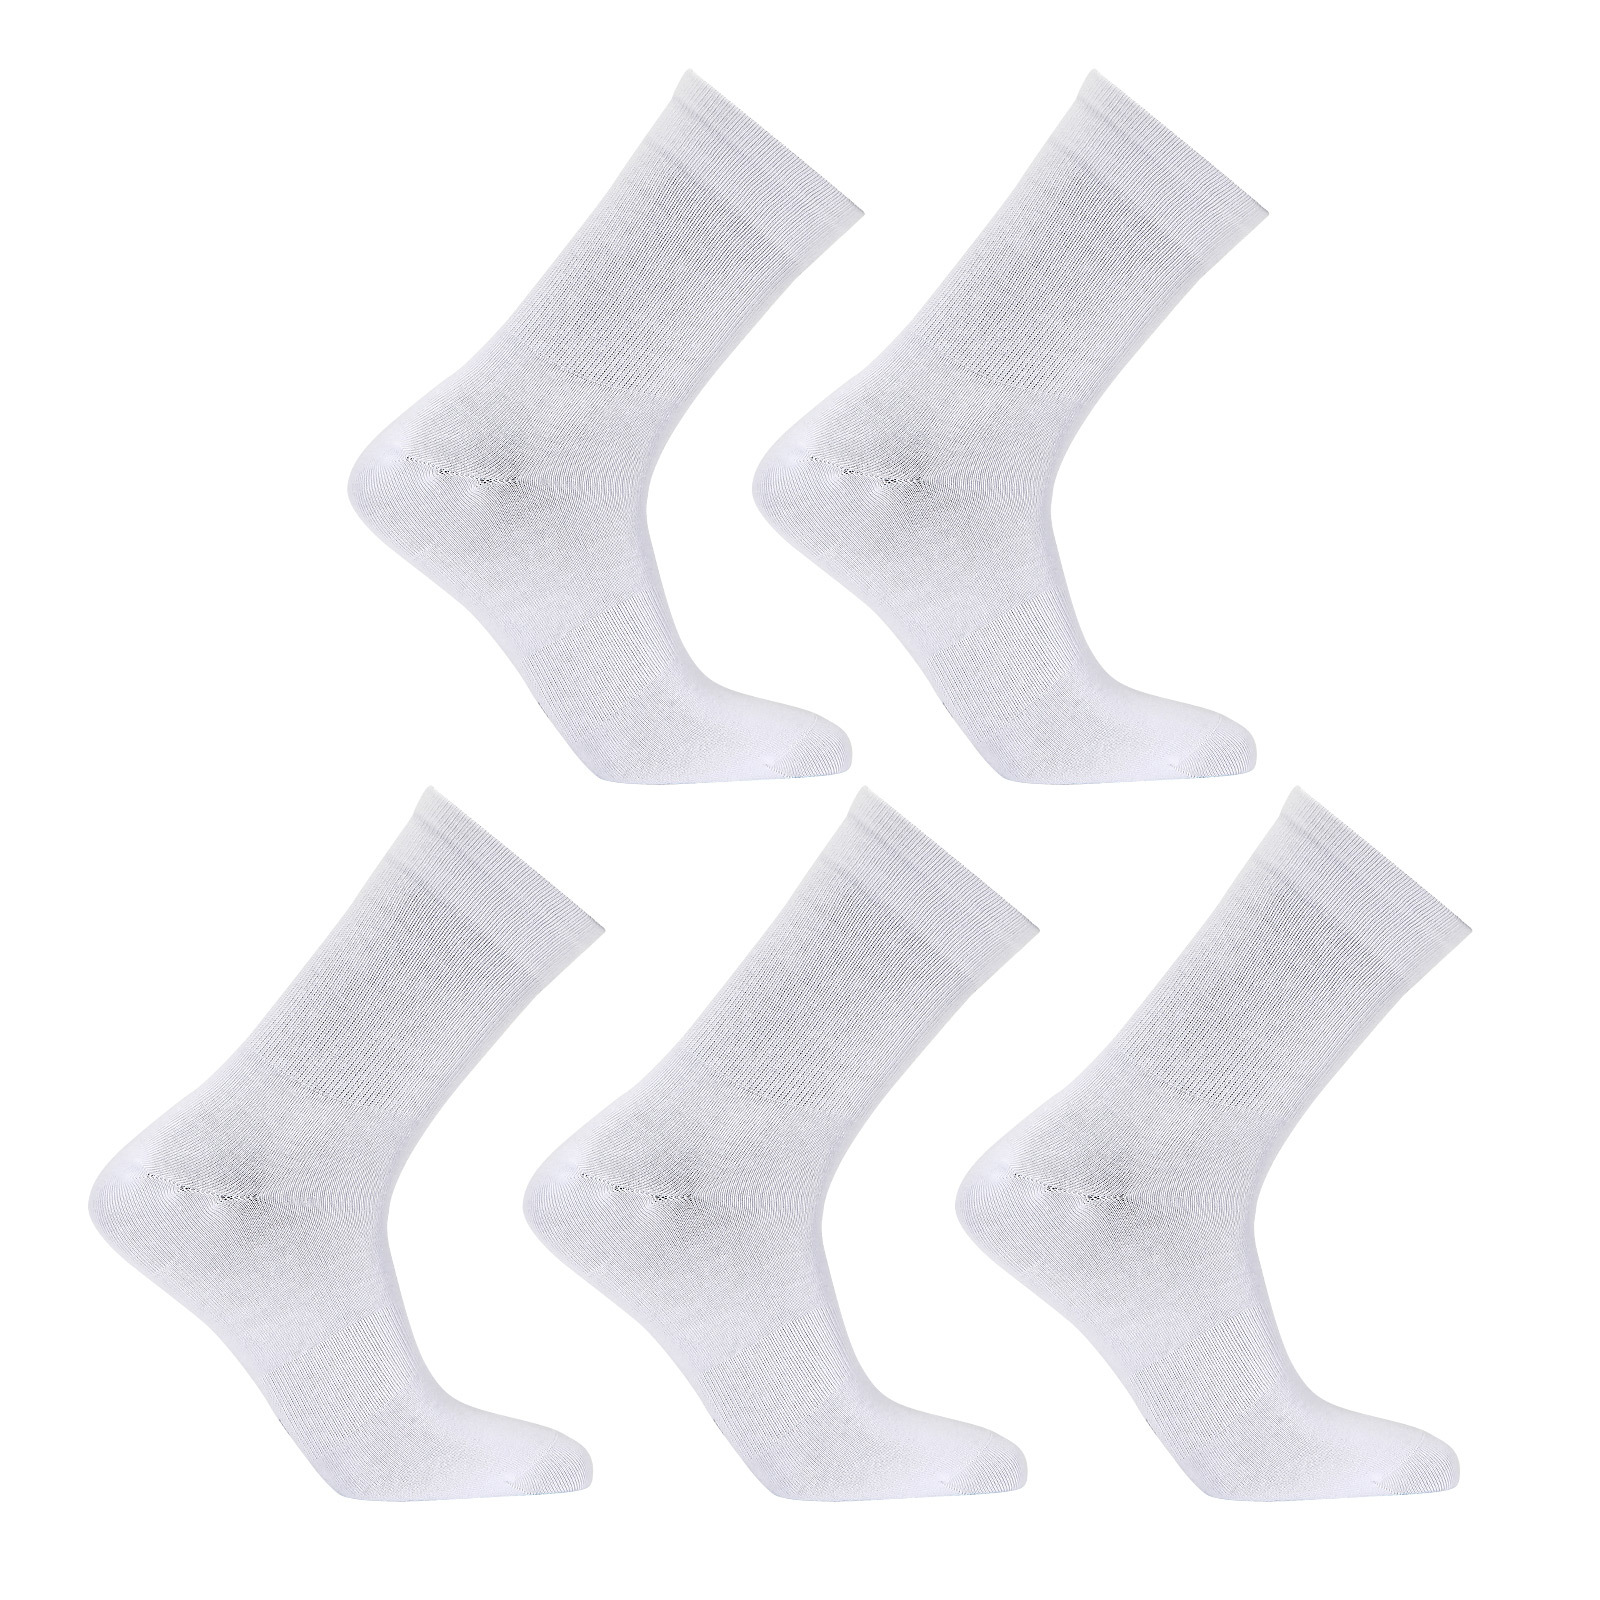 5X Large 3D Seamless Crew Socks - WHITE